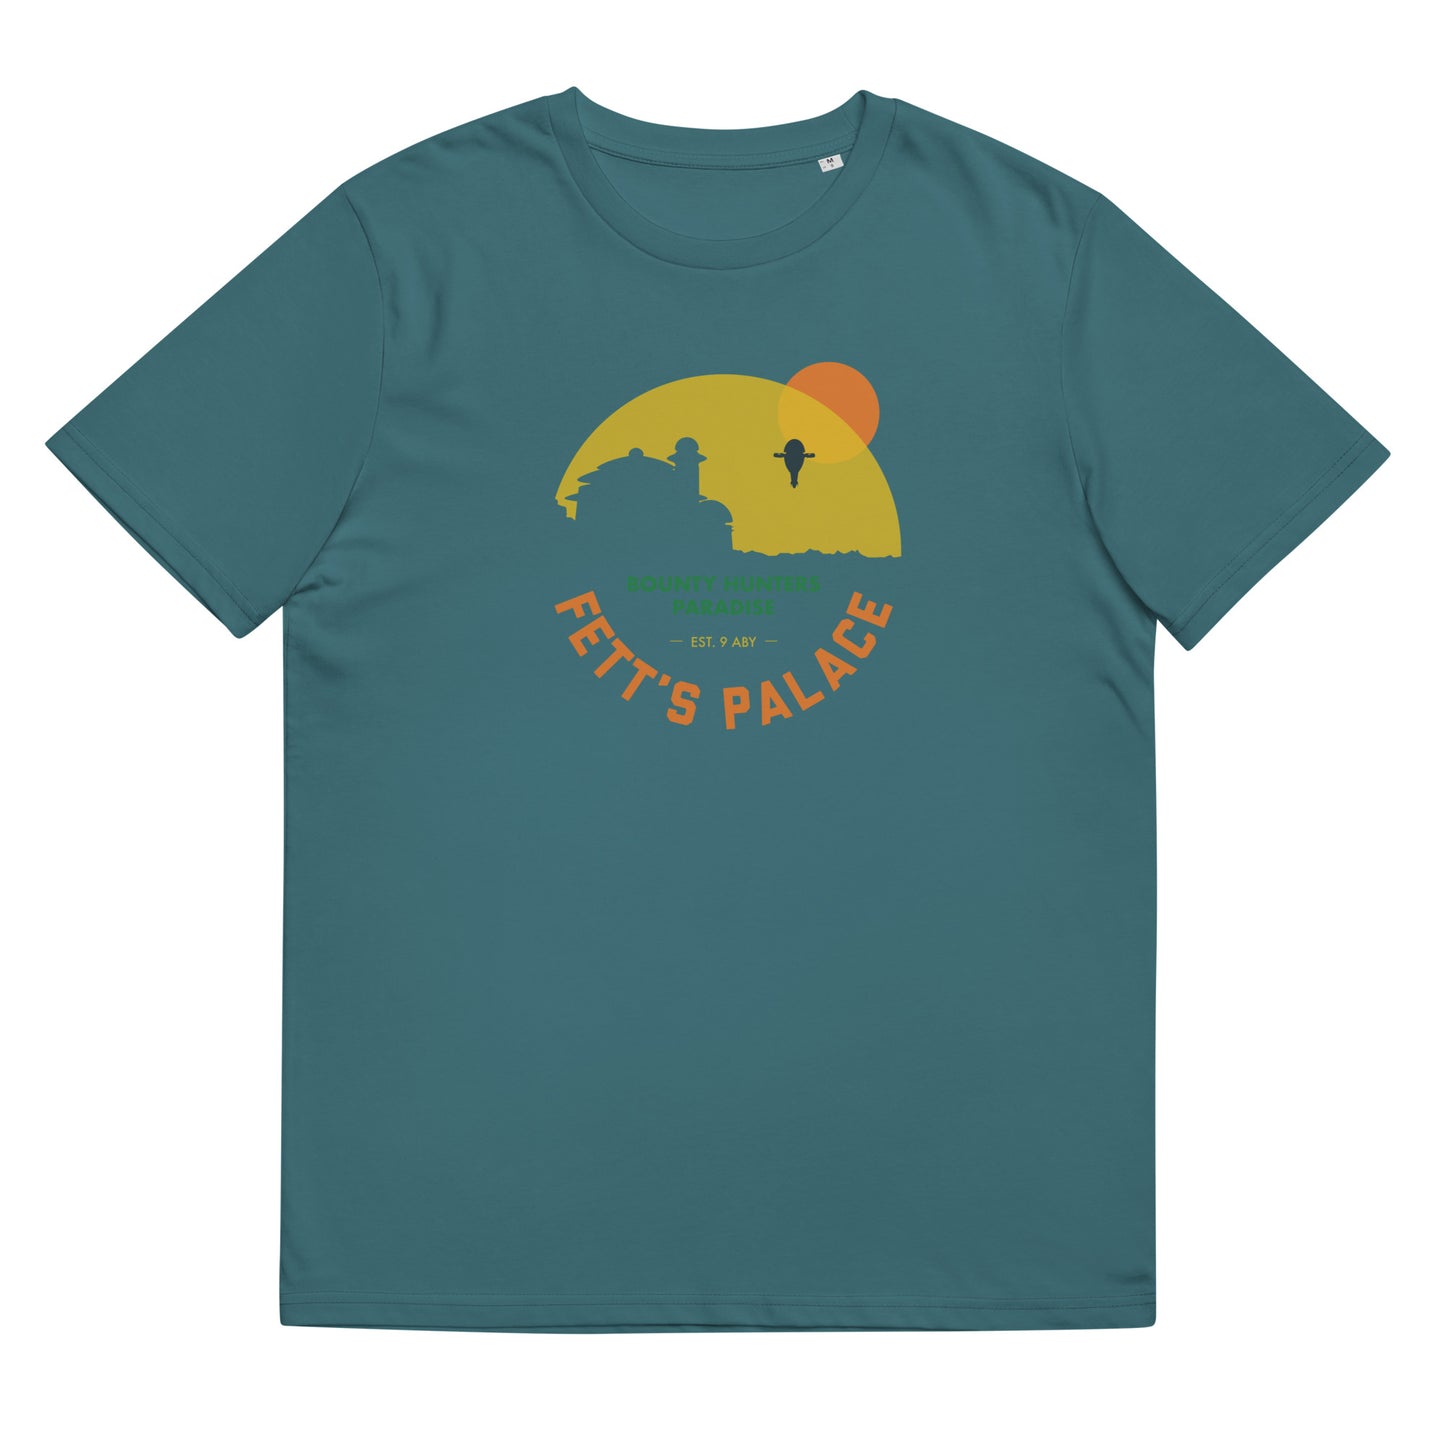 Fett's Palace Bounty Hunters Paradise - Unisex organic cotton t-shirt